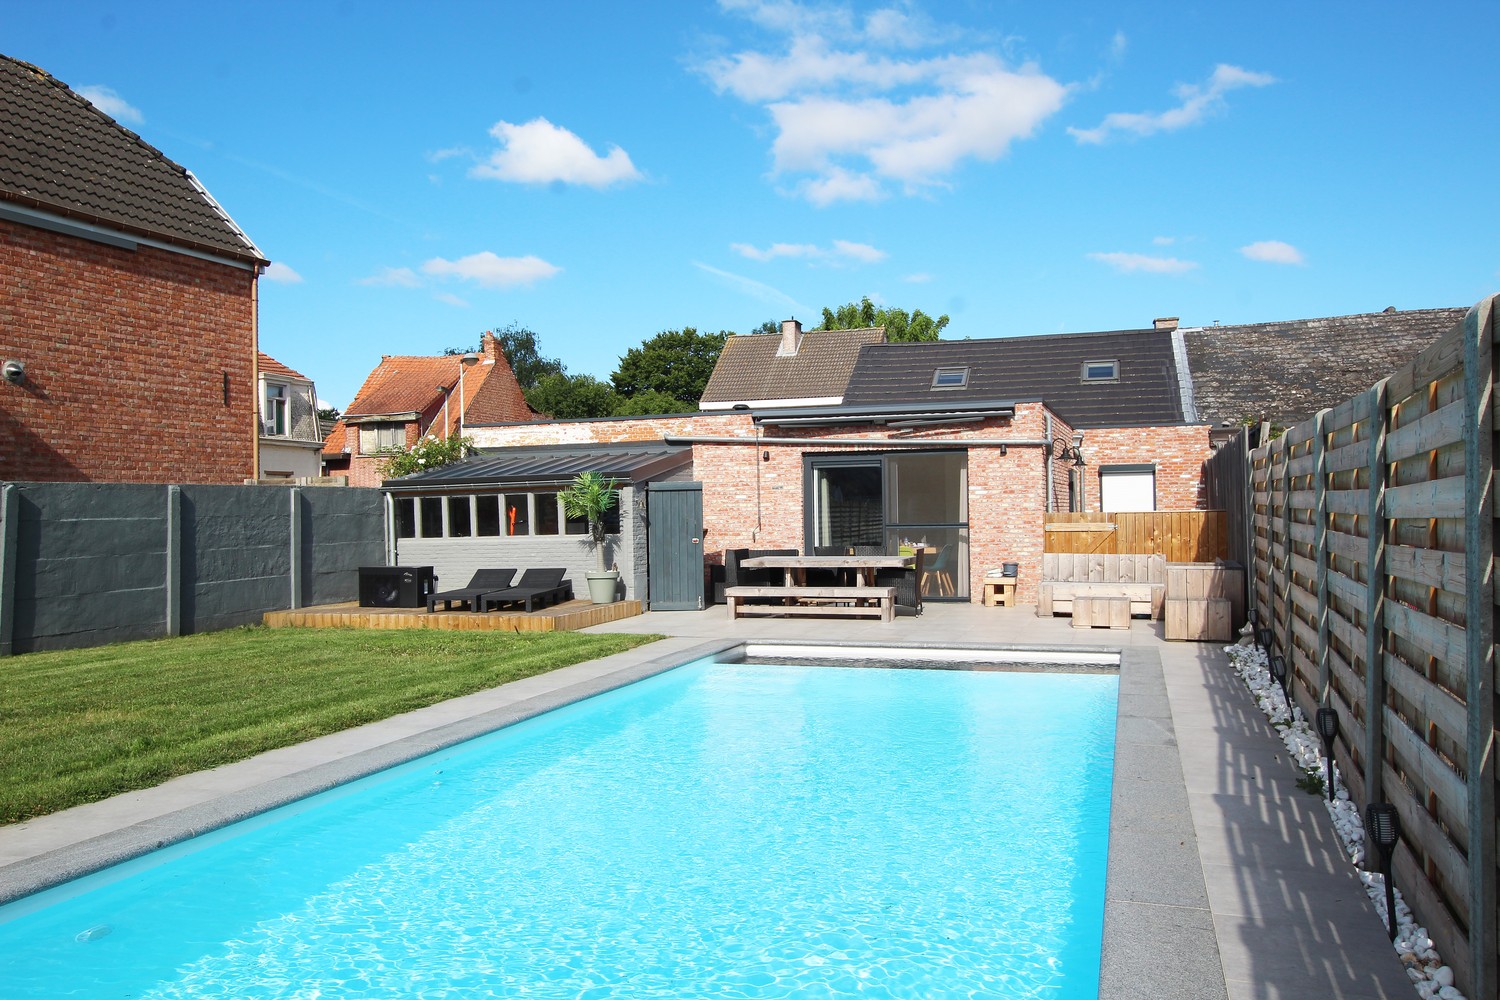 Verrassend ruime woning met riante tuin (774m²) en verwarmd zwembad in hartje Broechem! afbeelding 1